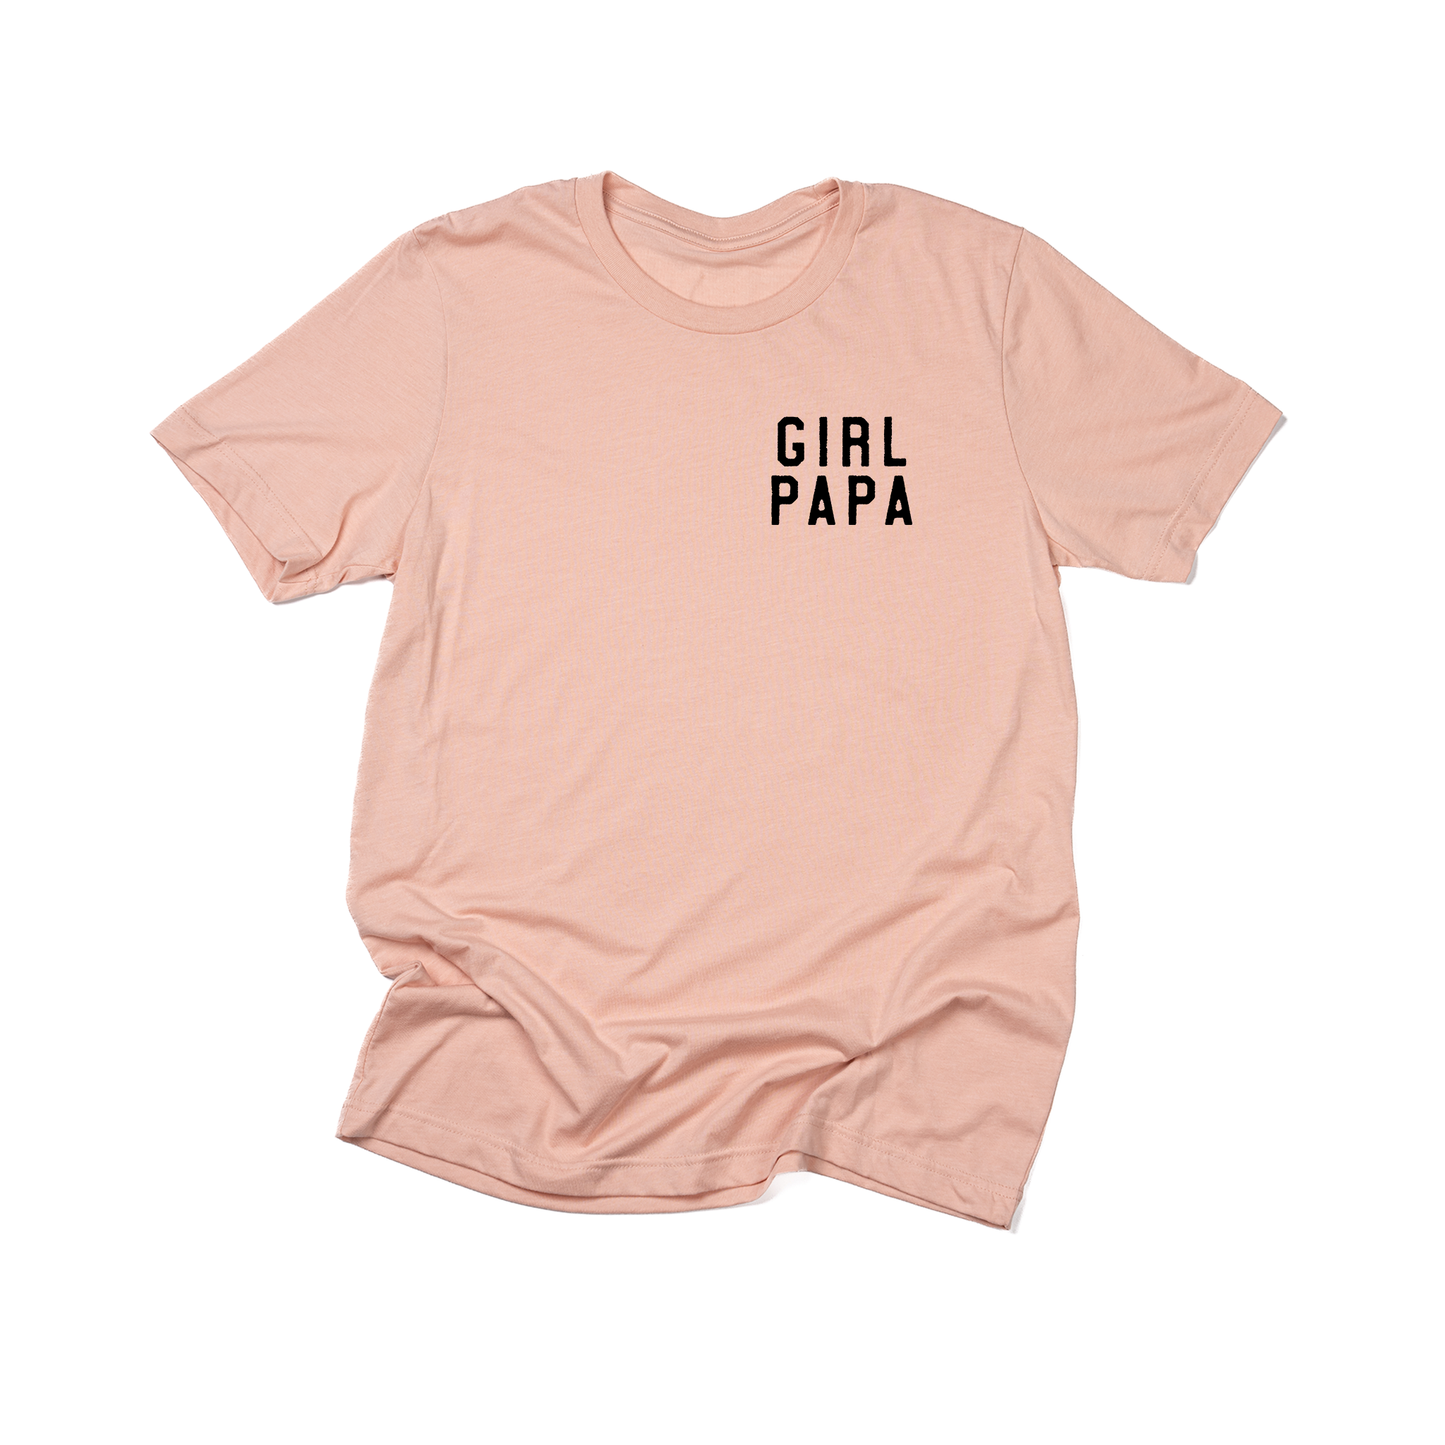 Girl Papa (Pocket, Black) - Tee (Peach)